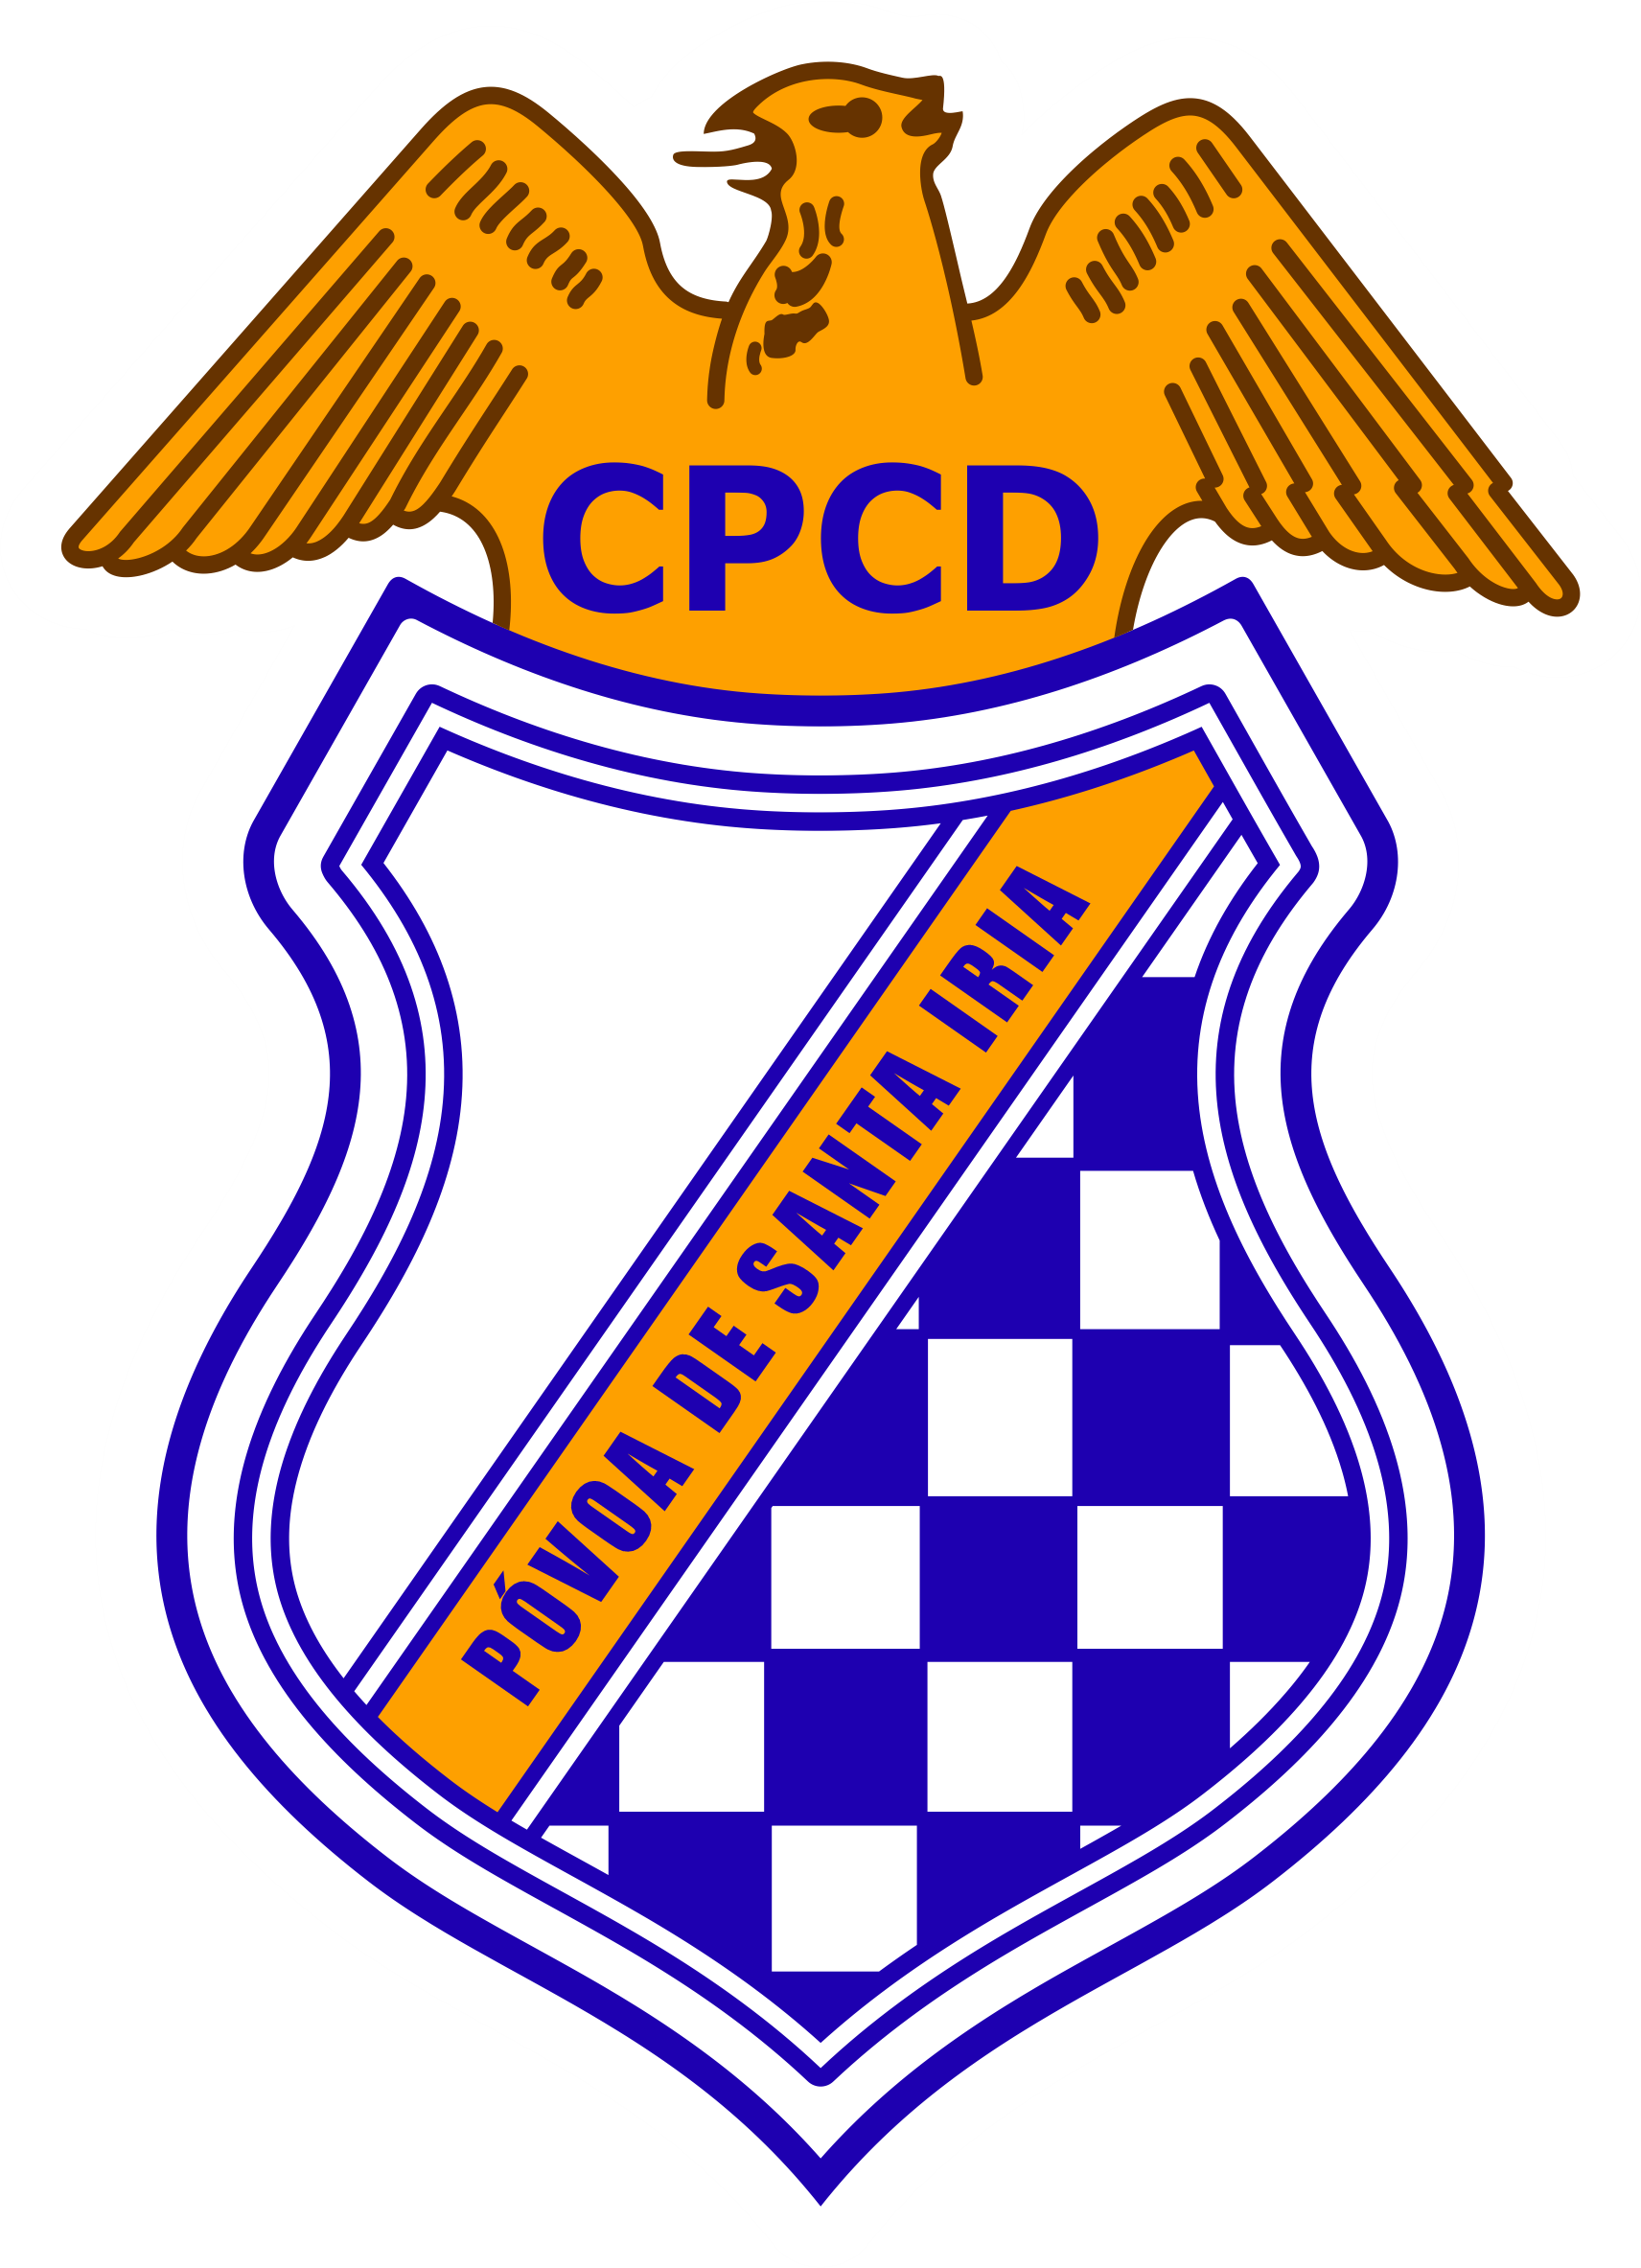 CPCD